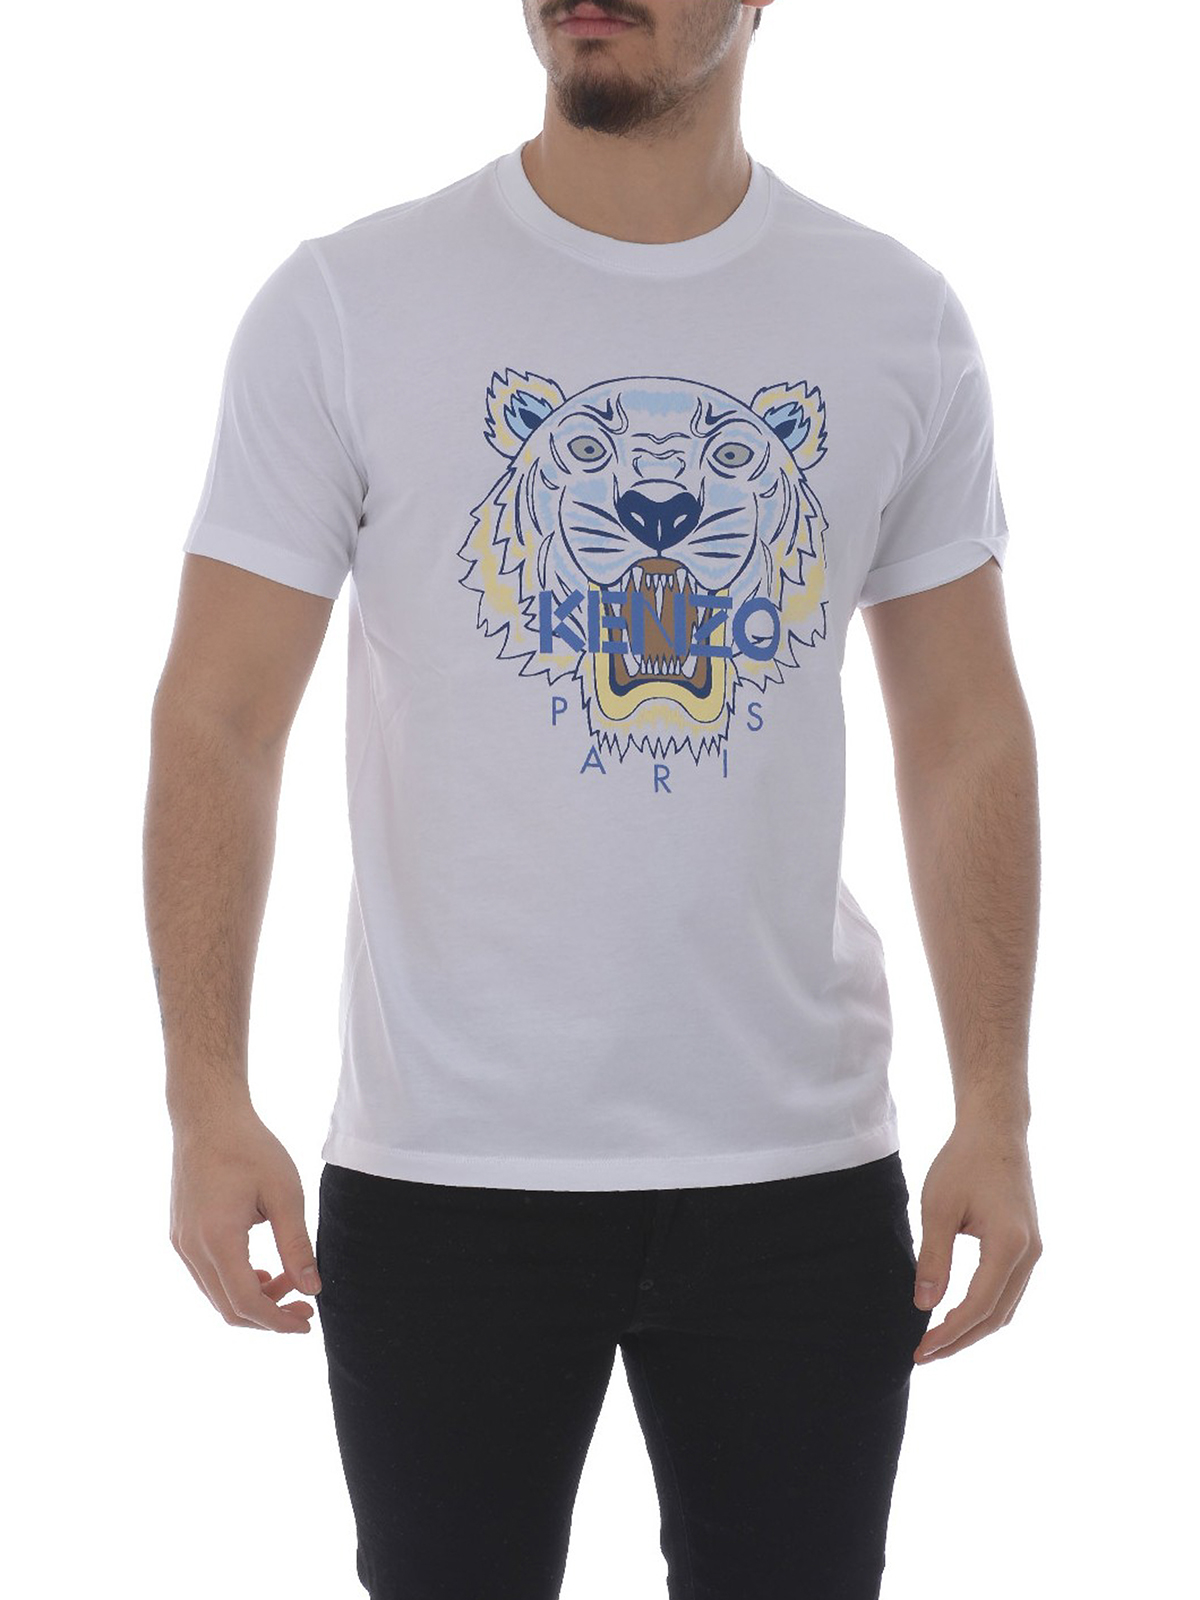 Tシャツ Kenzo - Tシャツ - 白 - F855TS0504YB01 | iKRIX shop online